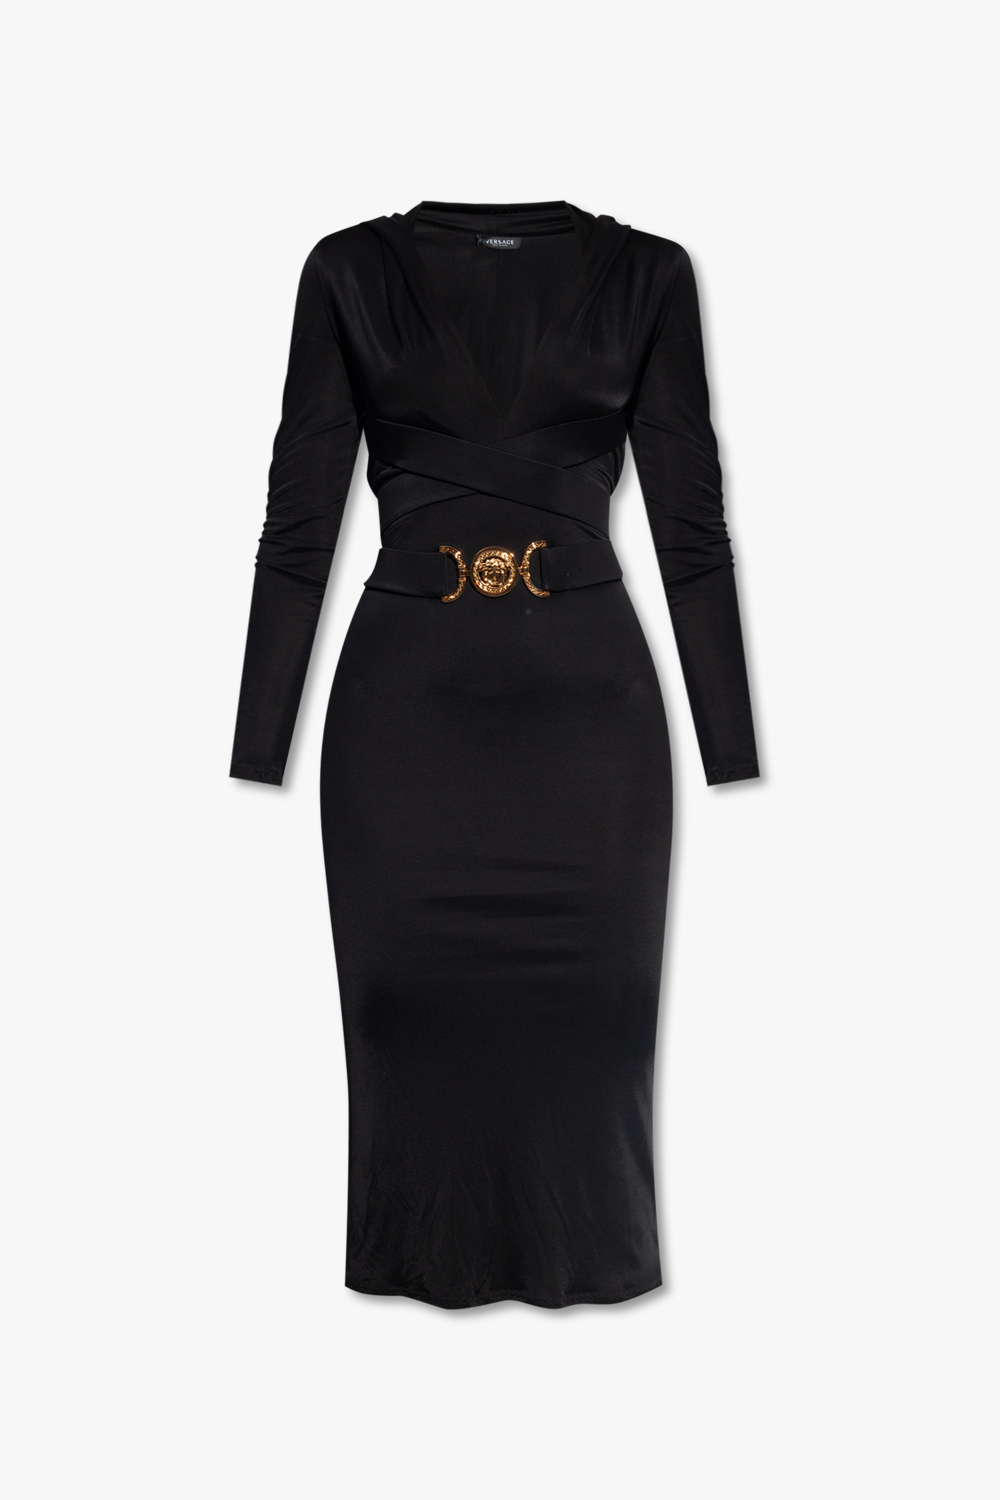 Versace Dress with logo